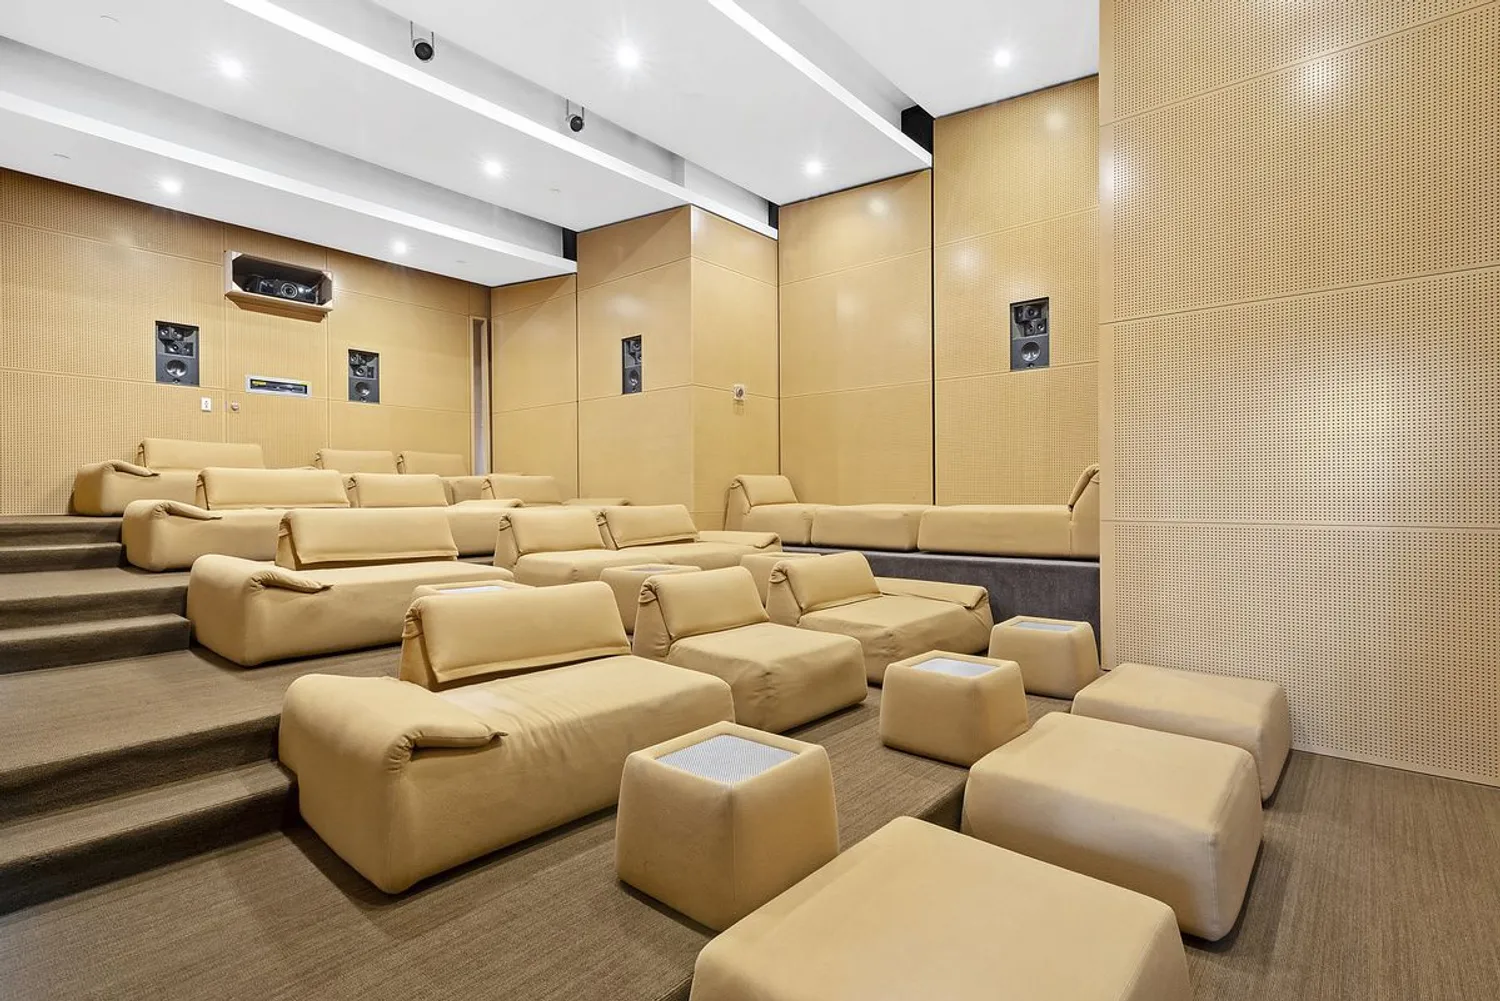 45 seat cinema screening room